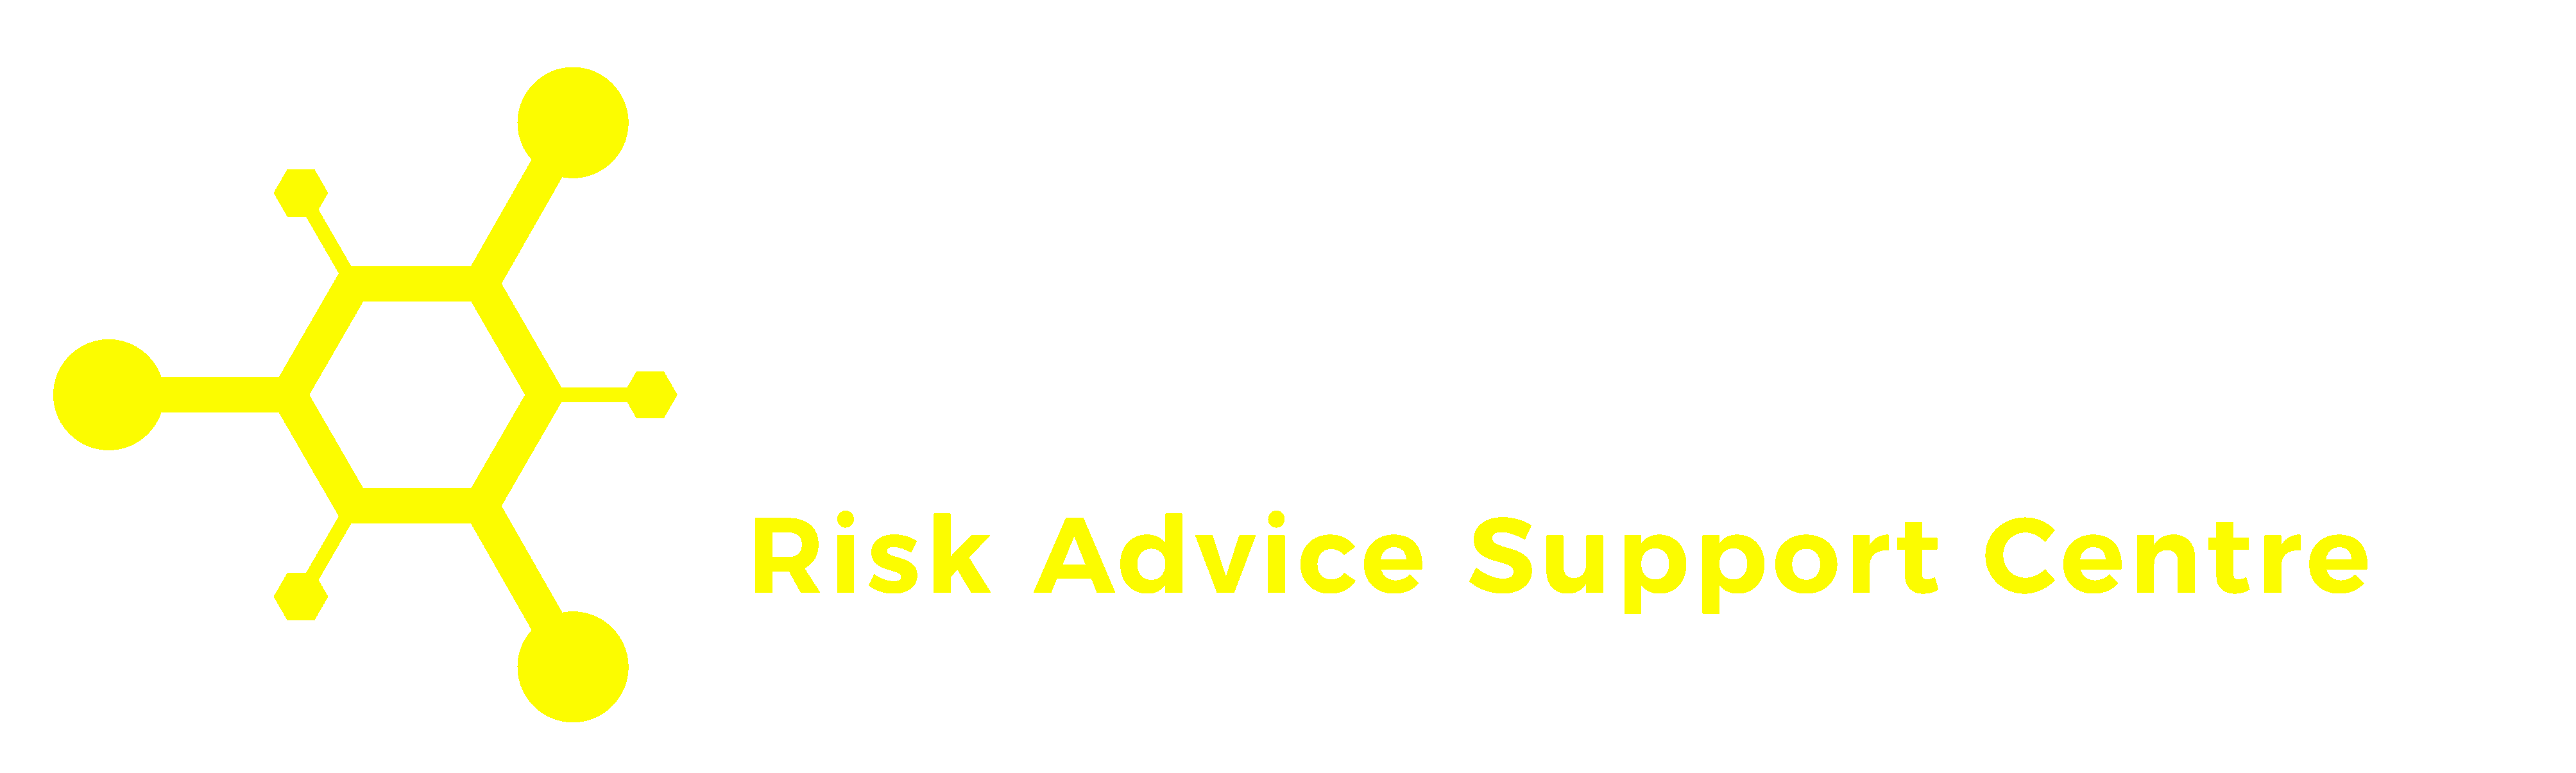 Risk Hub logo